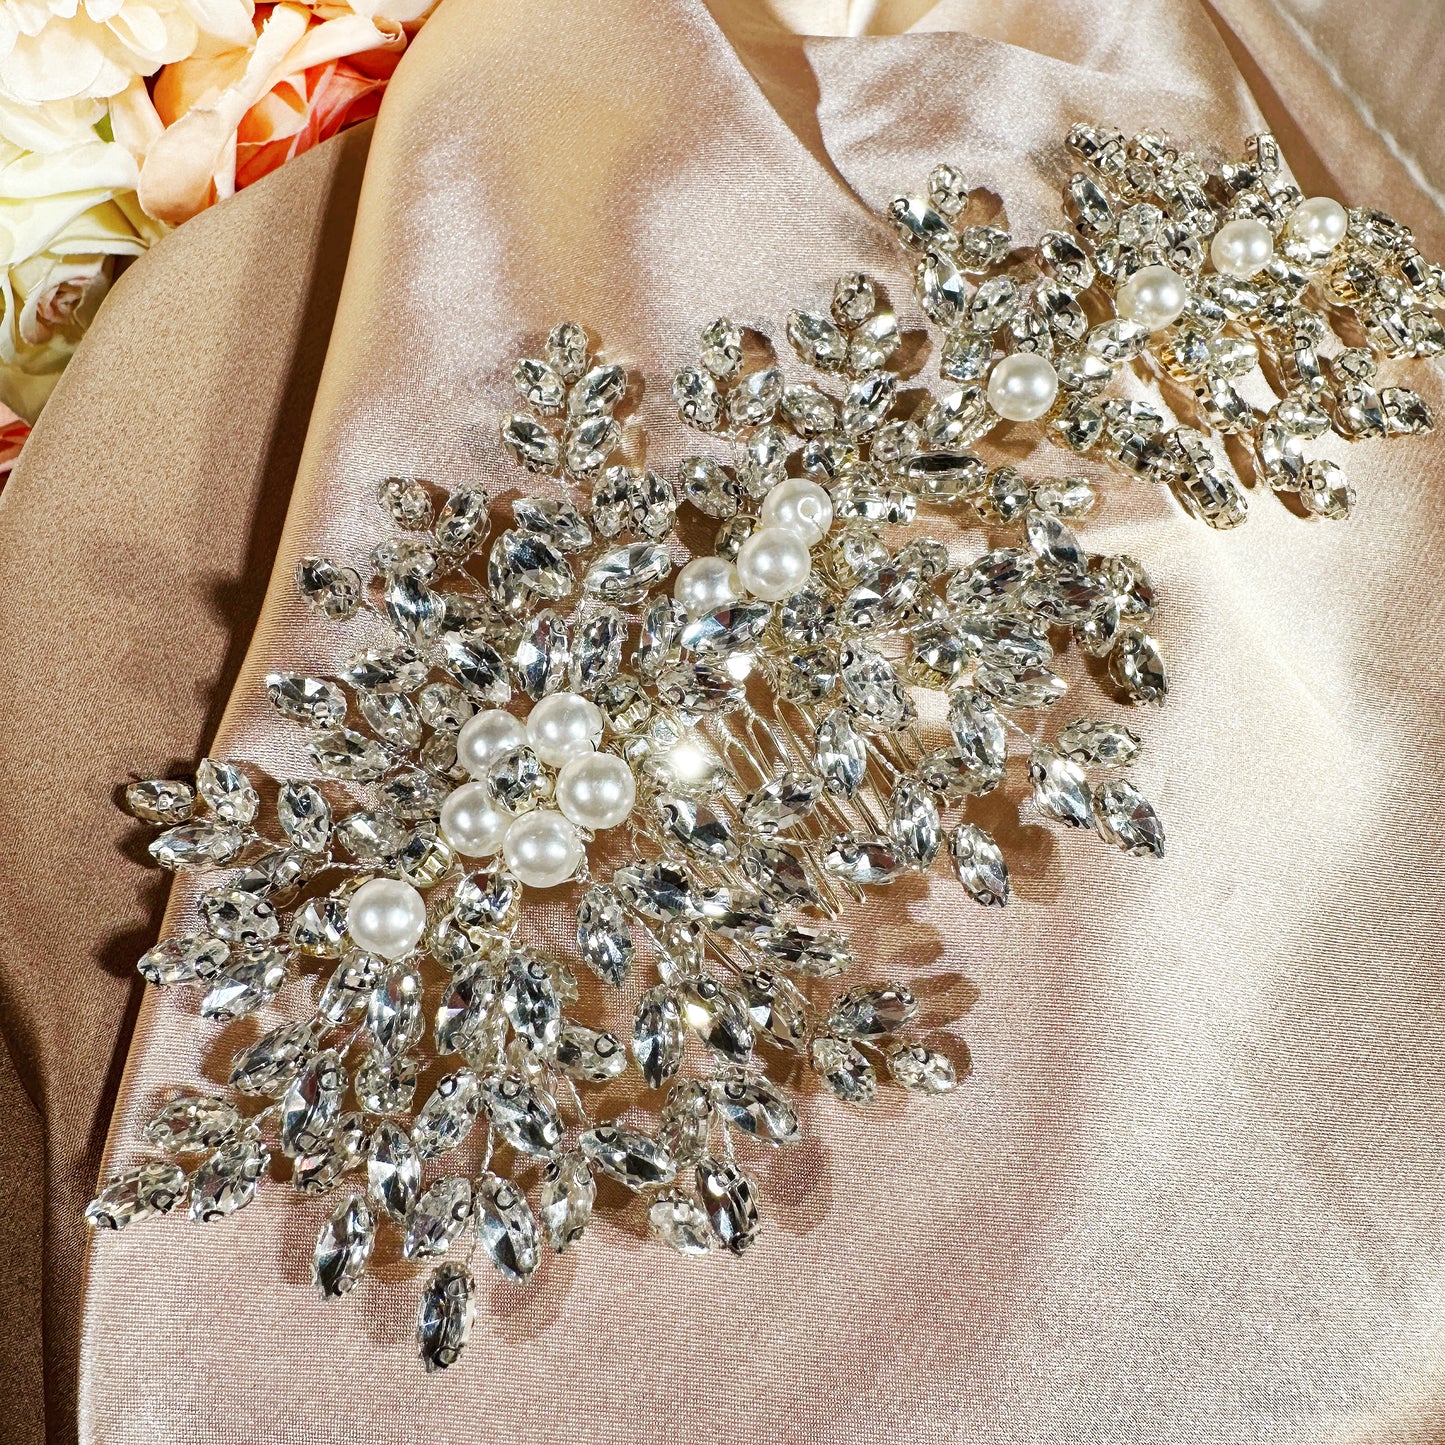 Bridal Haircomb with Pearls and Crystals | Glamorous Rhinestone Headpiece